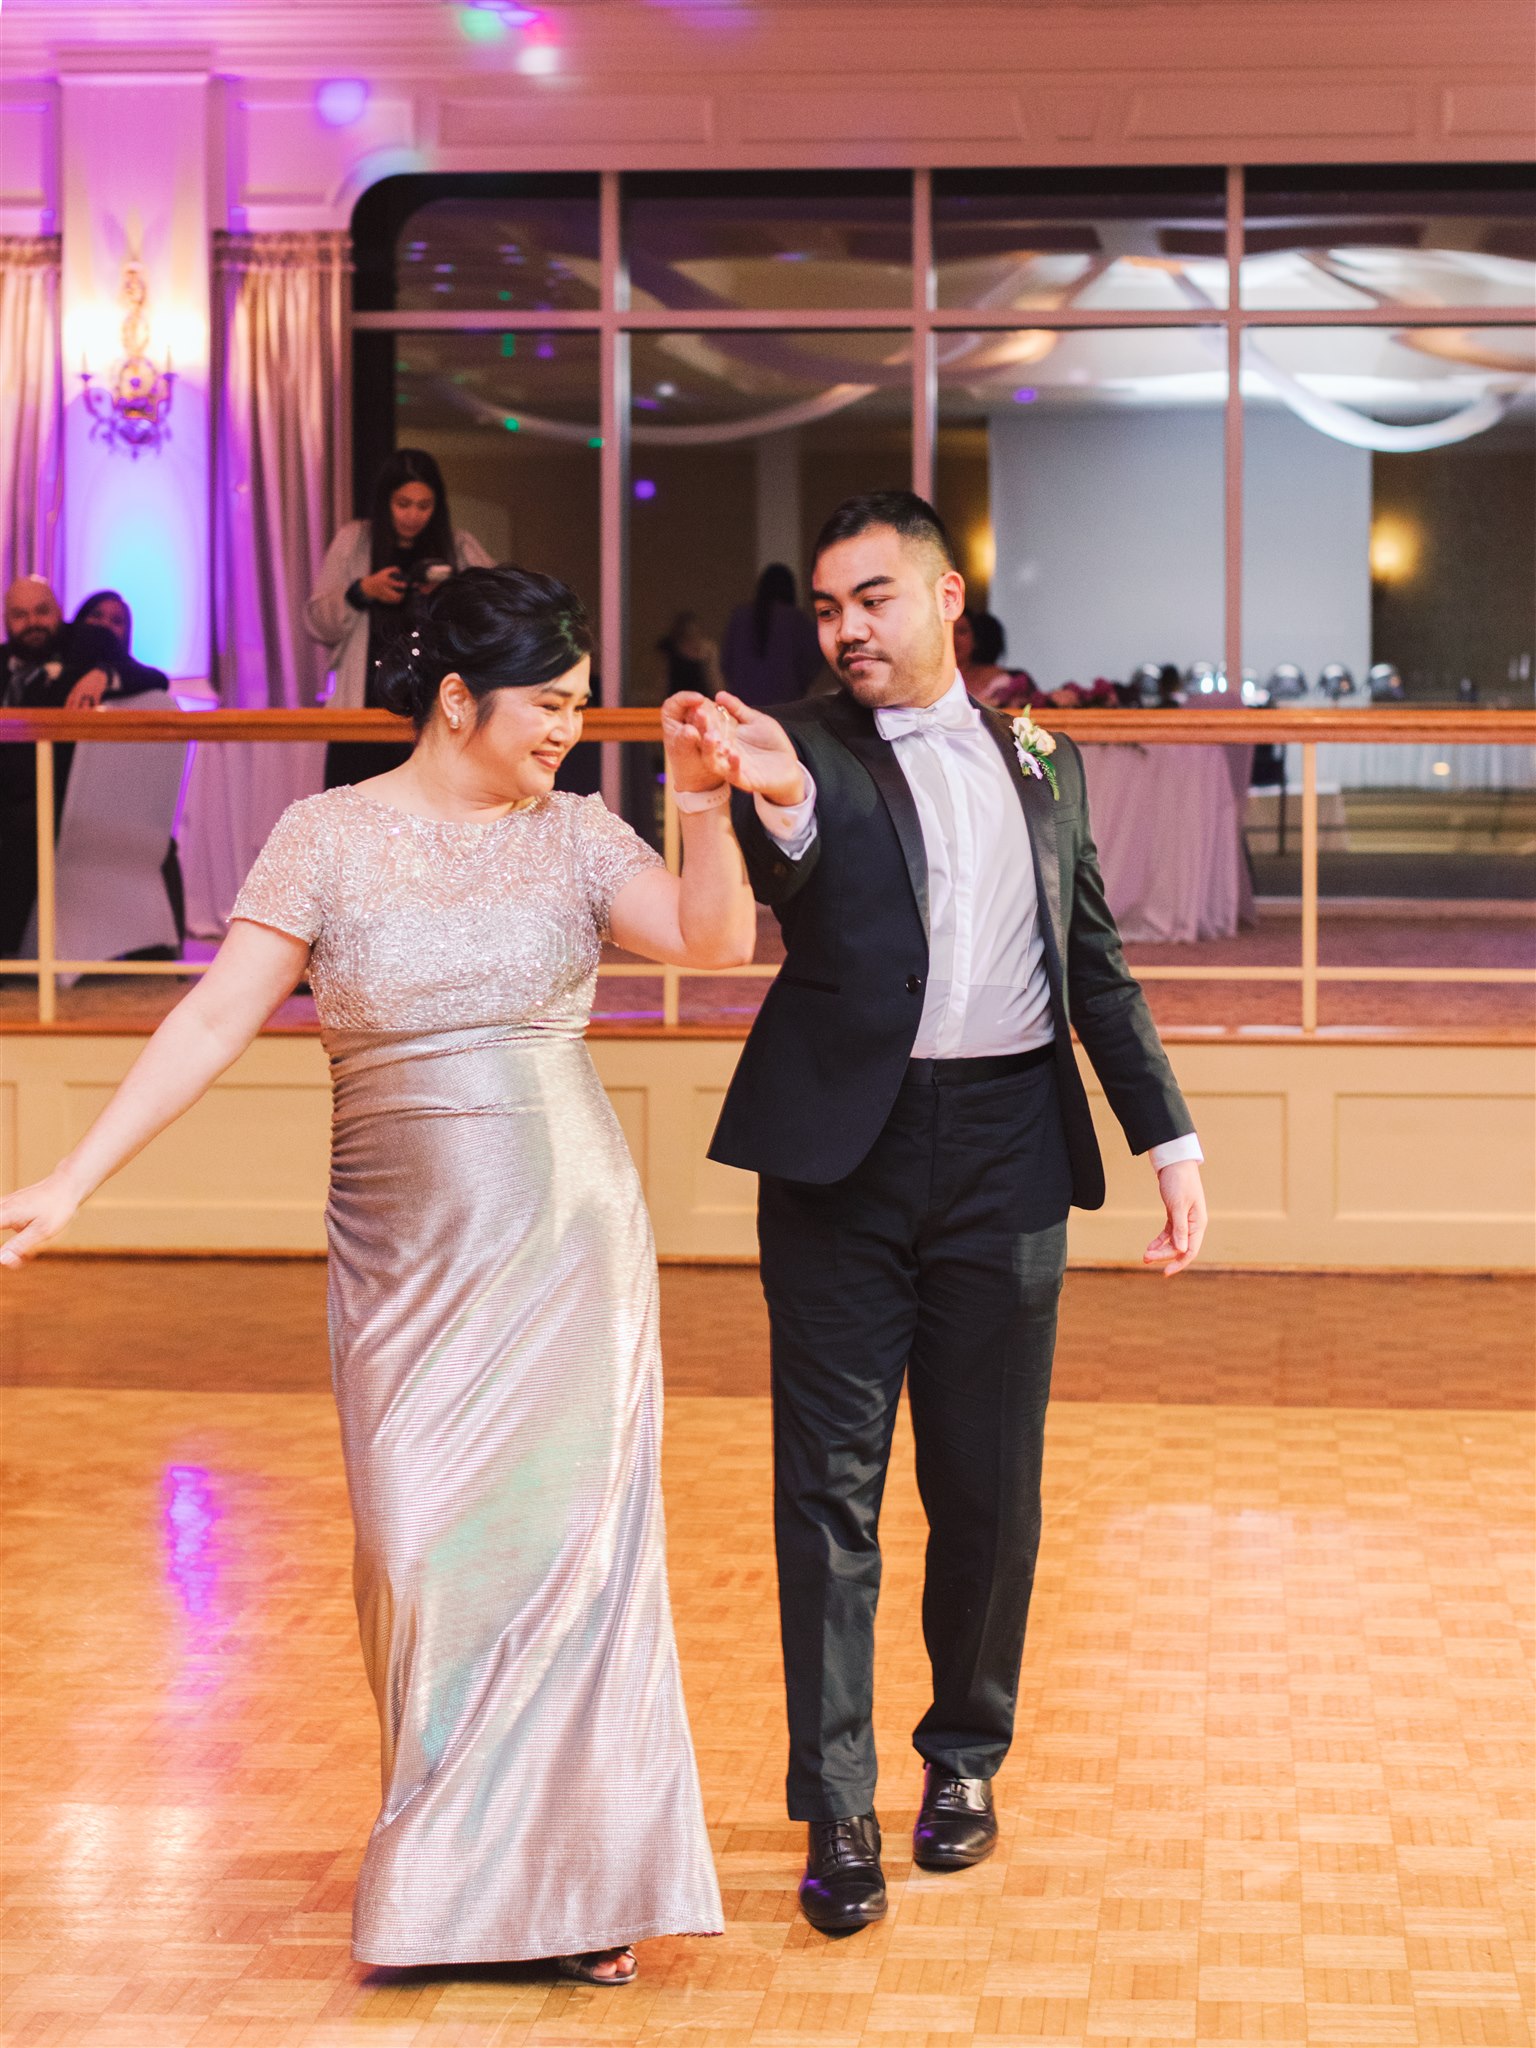 mother-son dance during Norfolk VA wedding reception